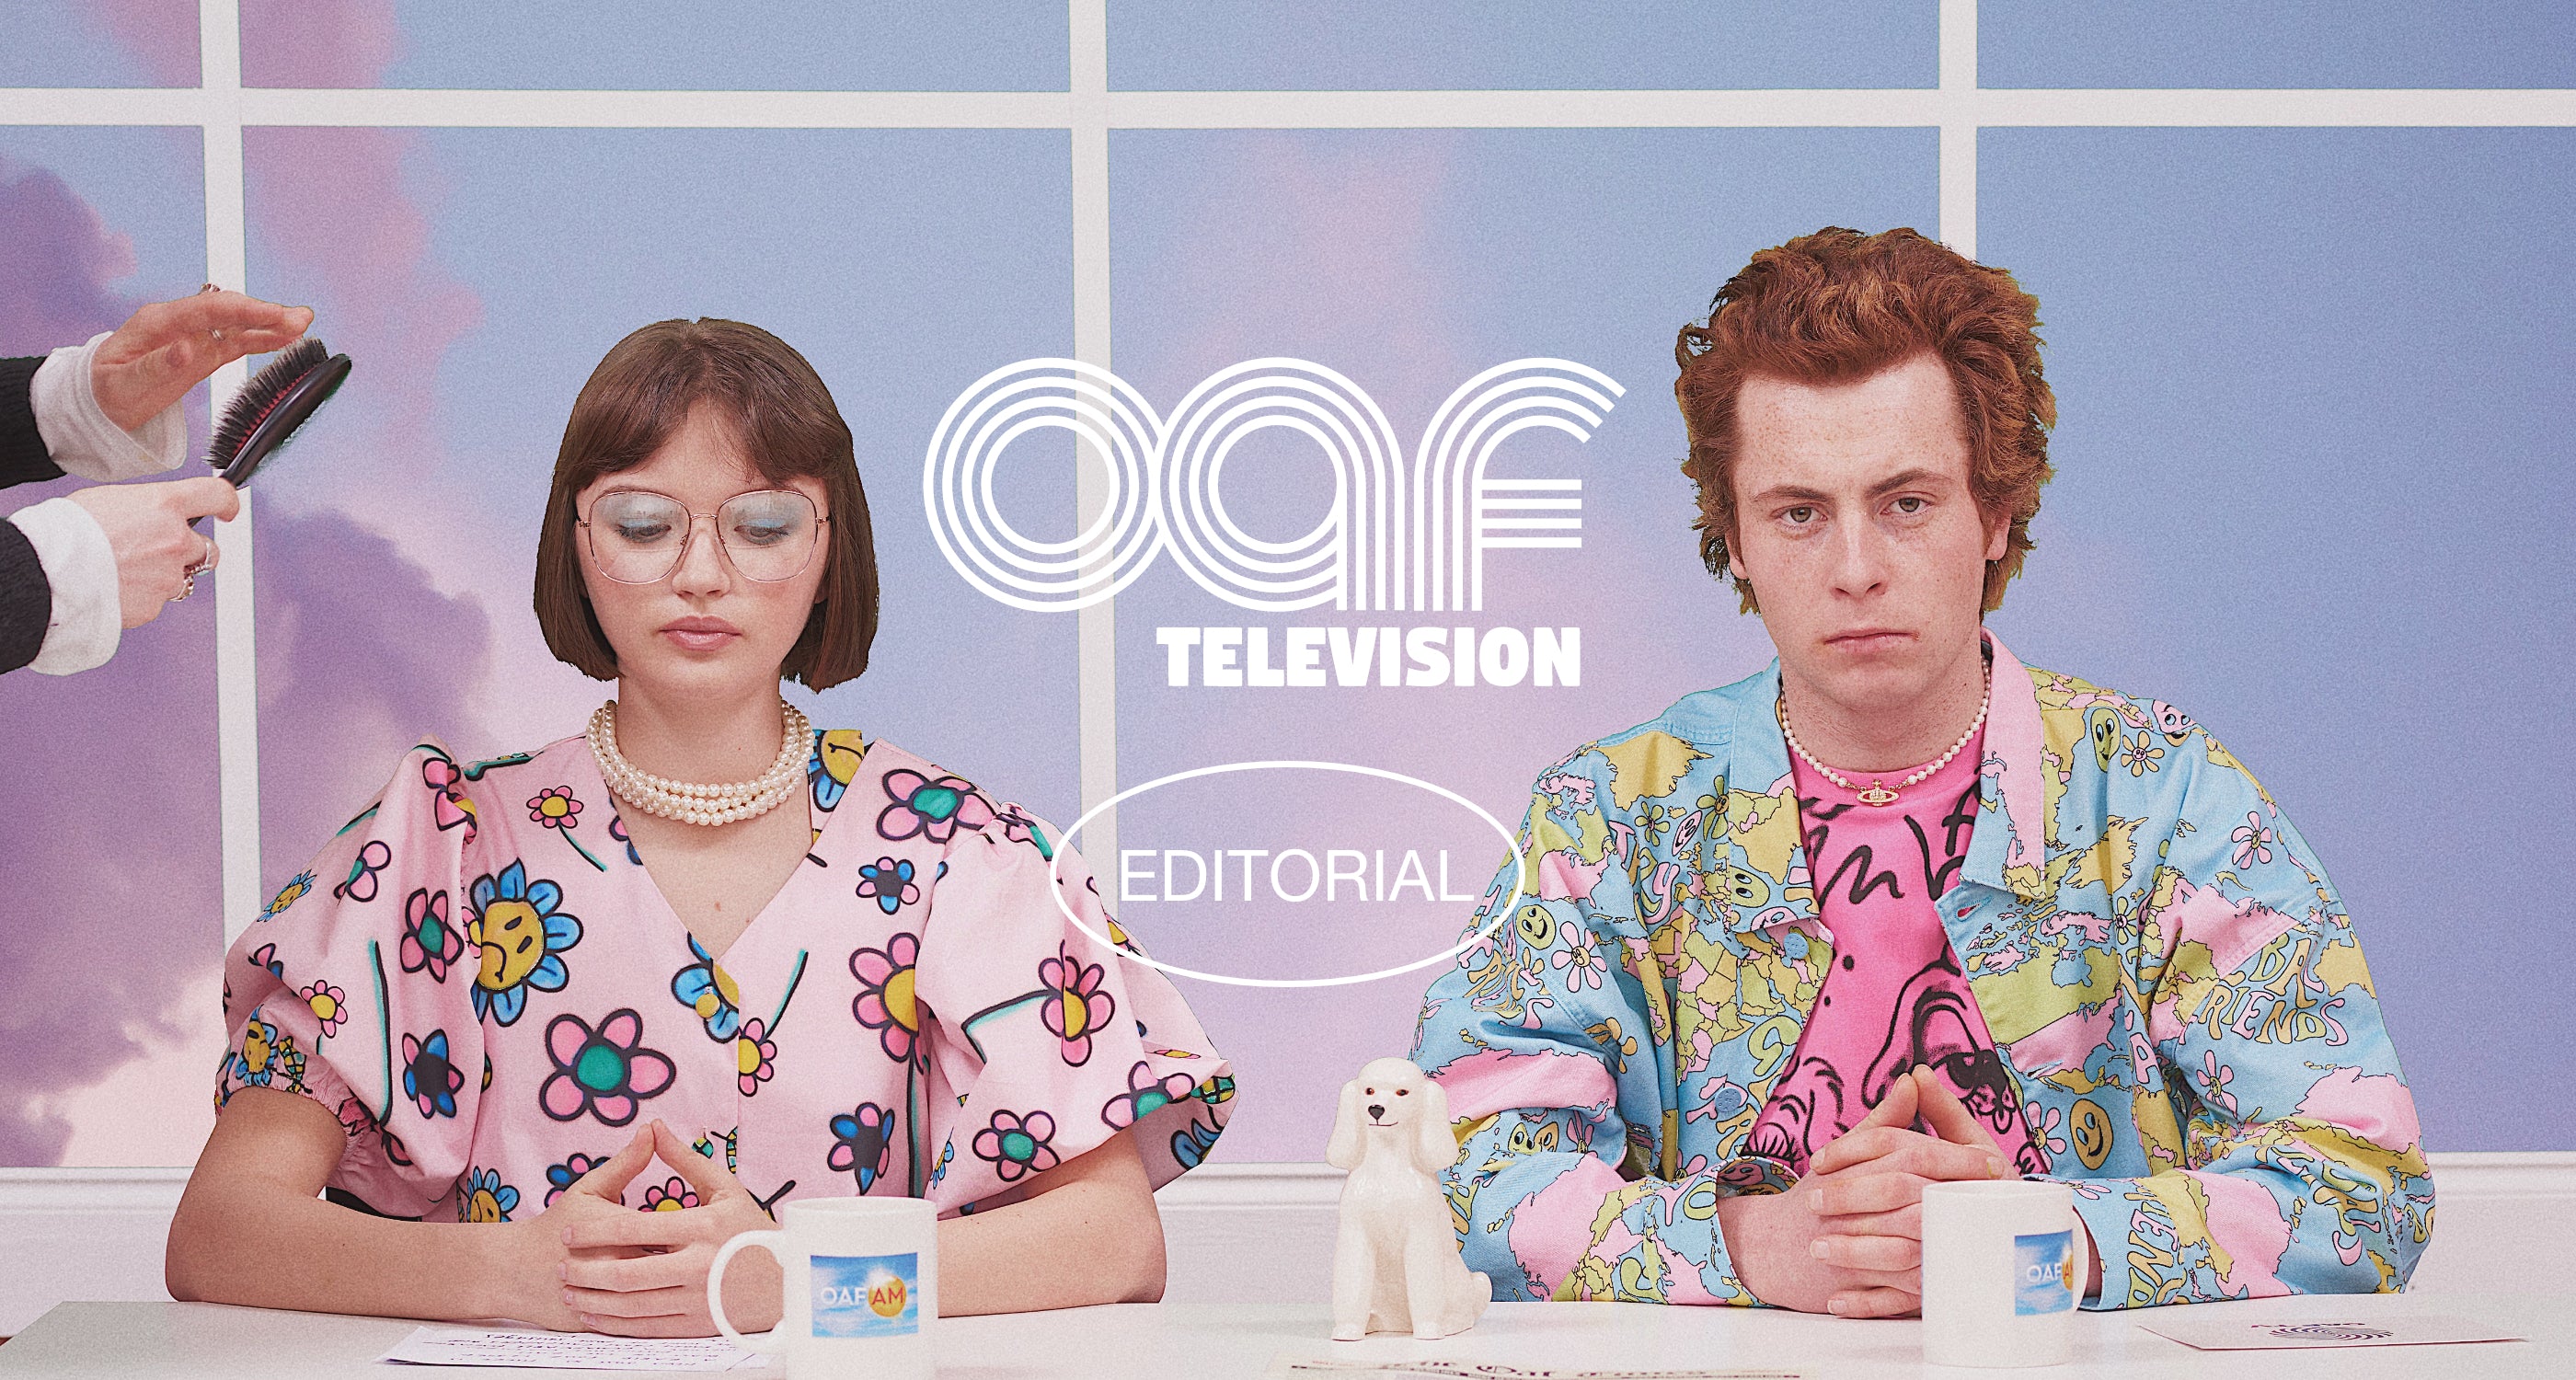 OAF TV campaign